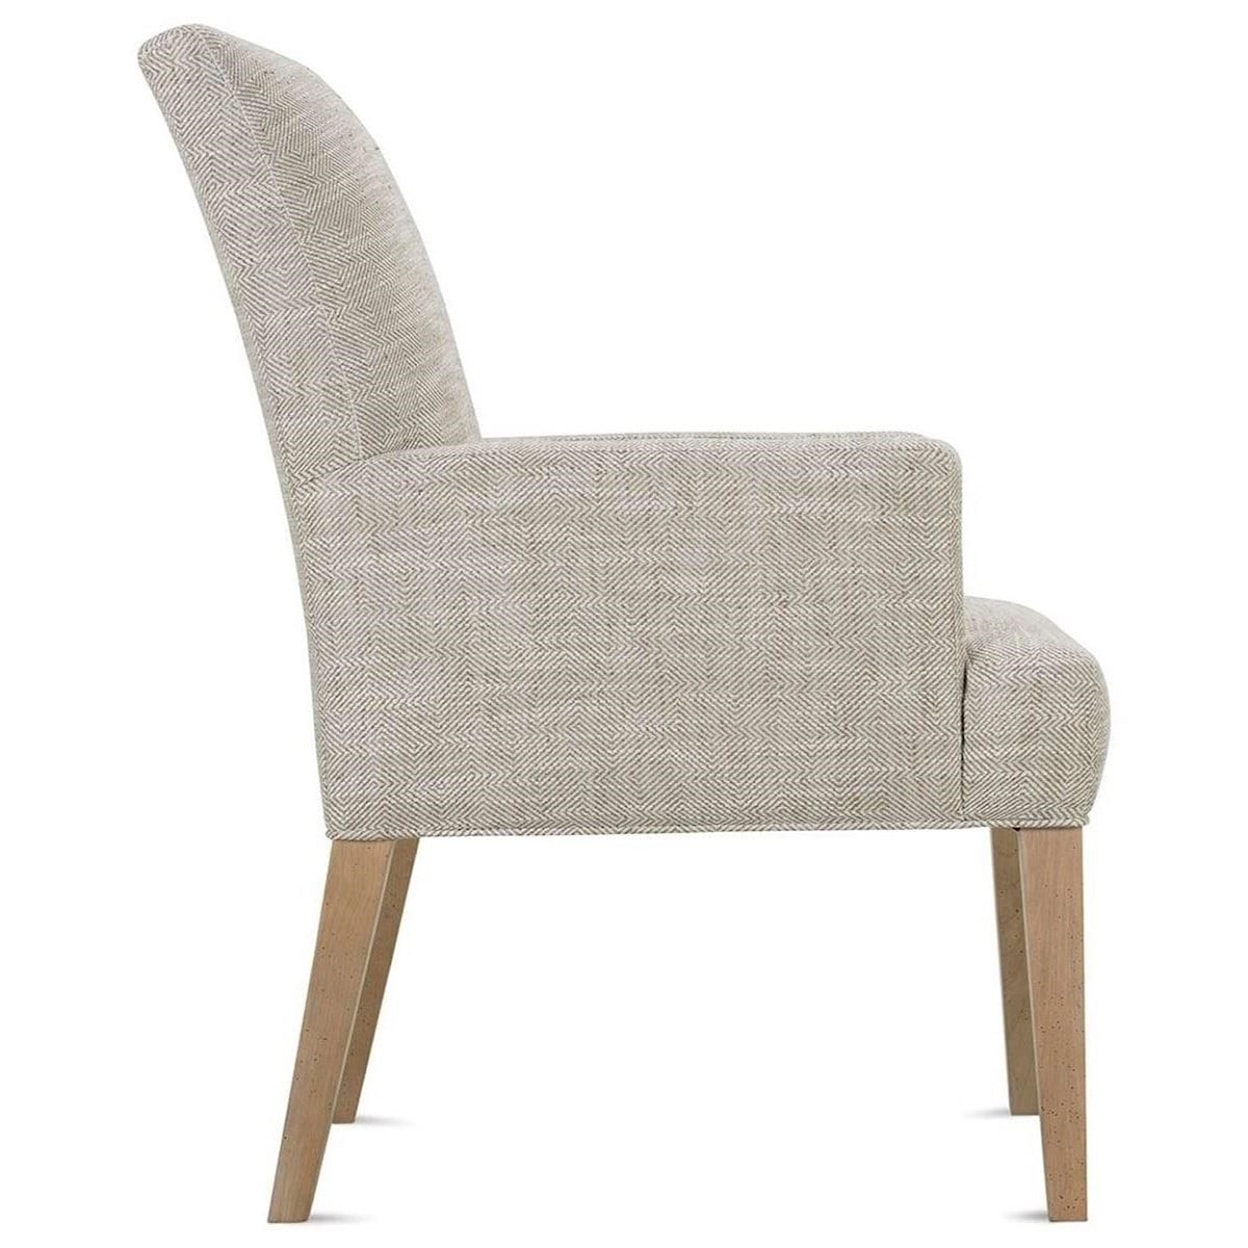 Rowe Finch Arm Chair